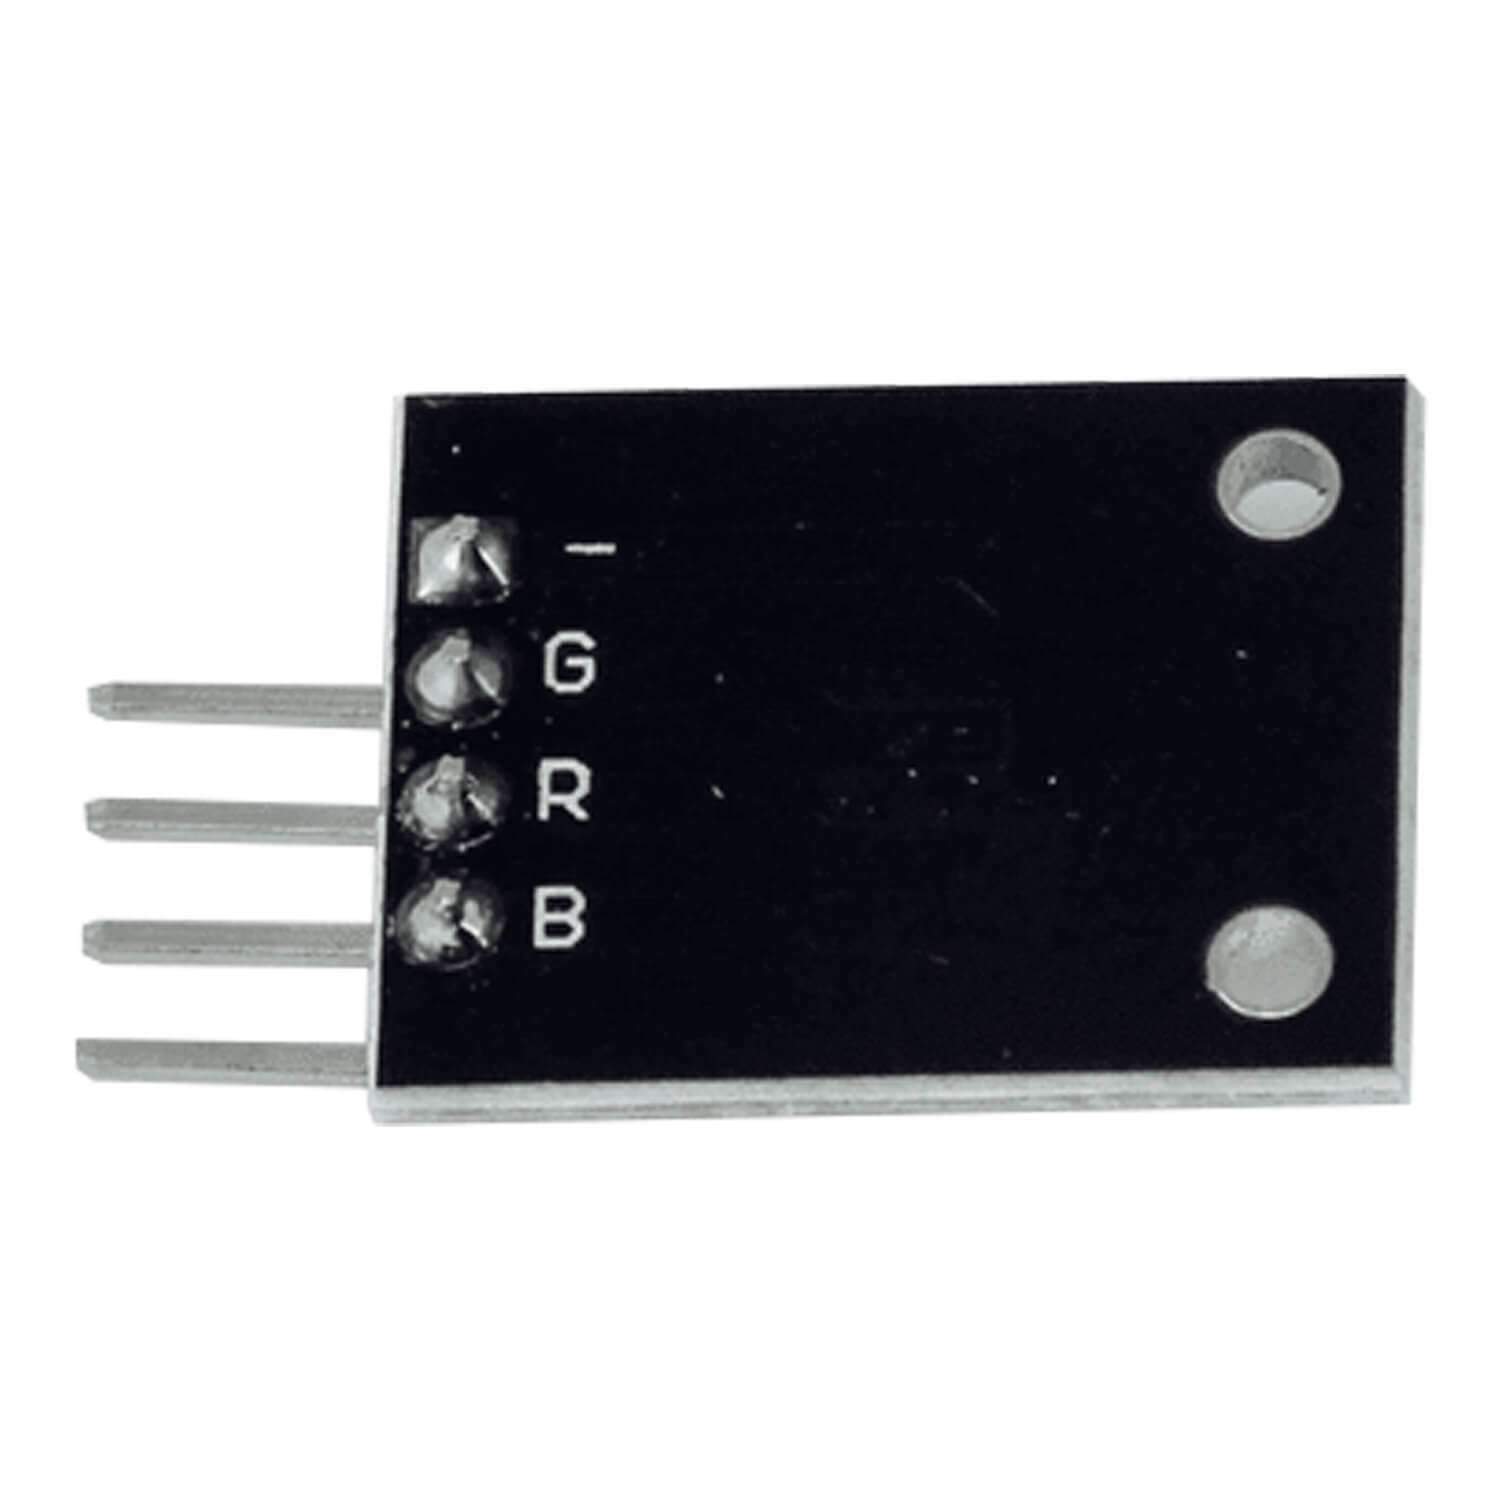 KY-009 RGB LED SMD Modul Sensor - AZ-Delivery